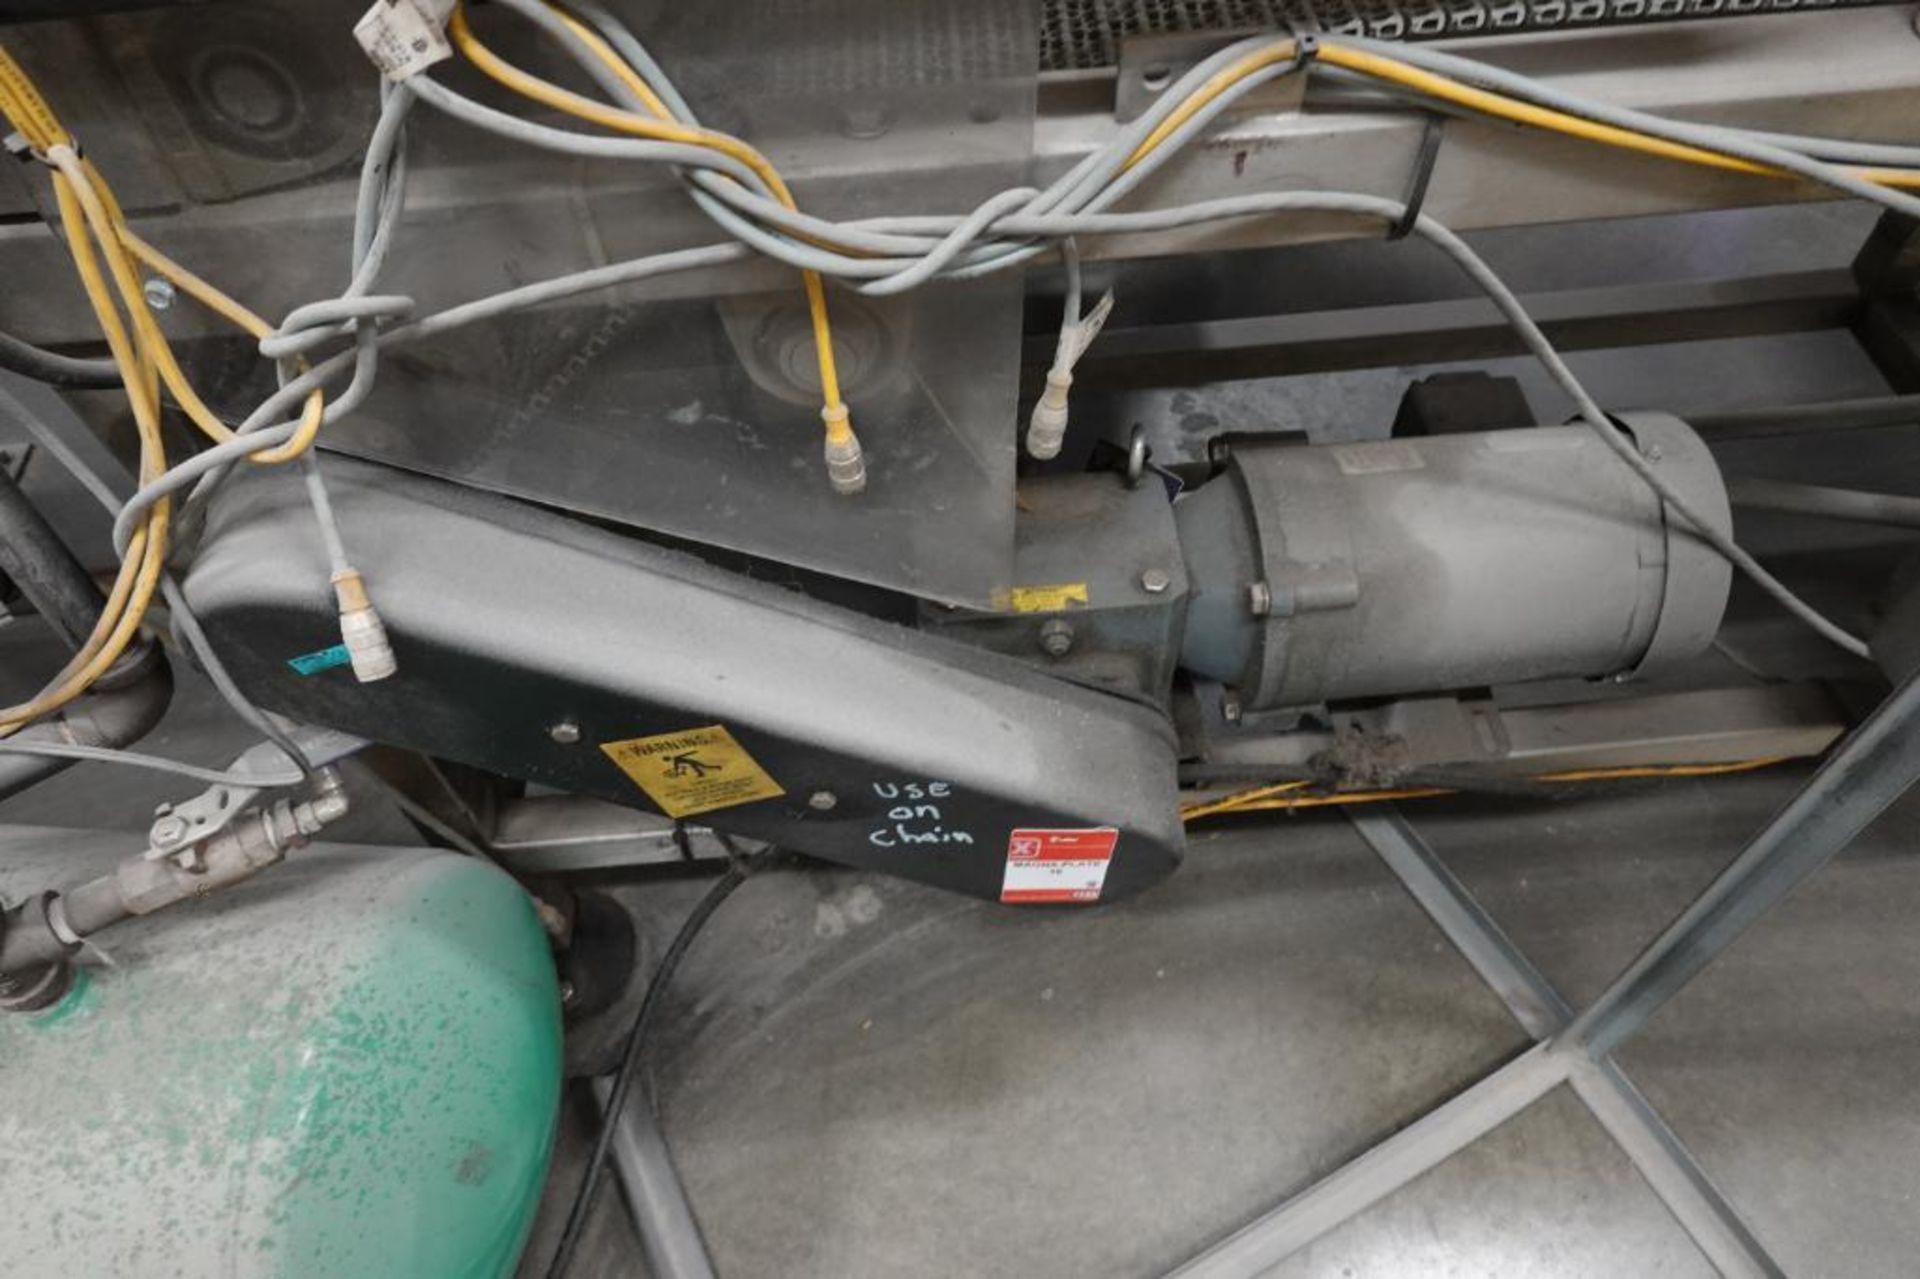 Safeline metal detector with conveyor - Image 10 of 11